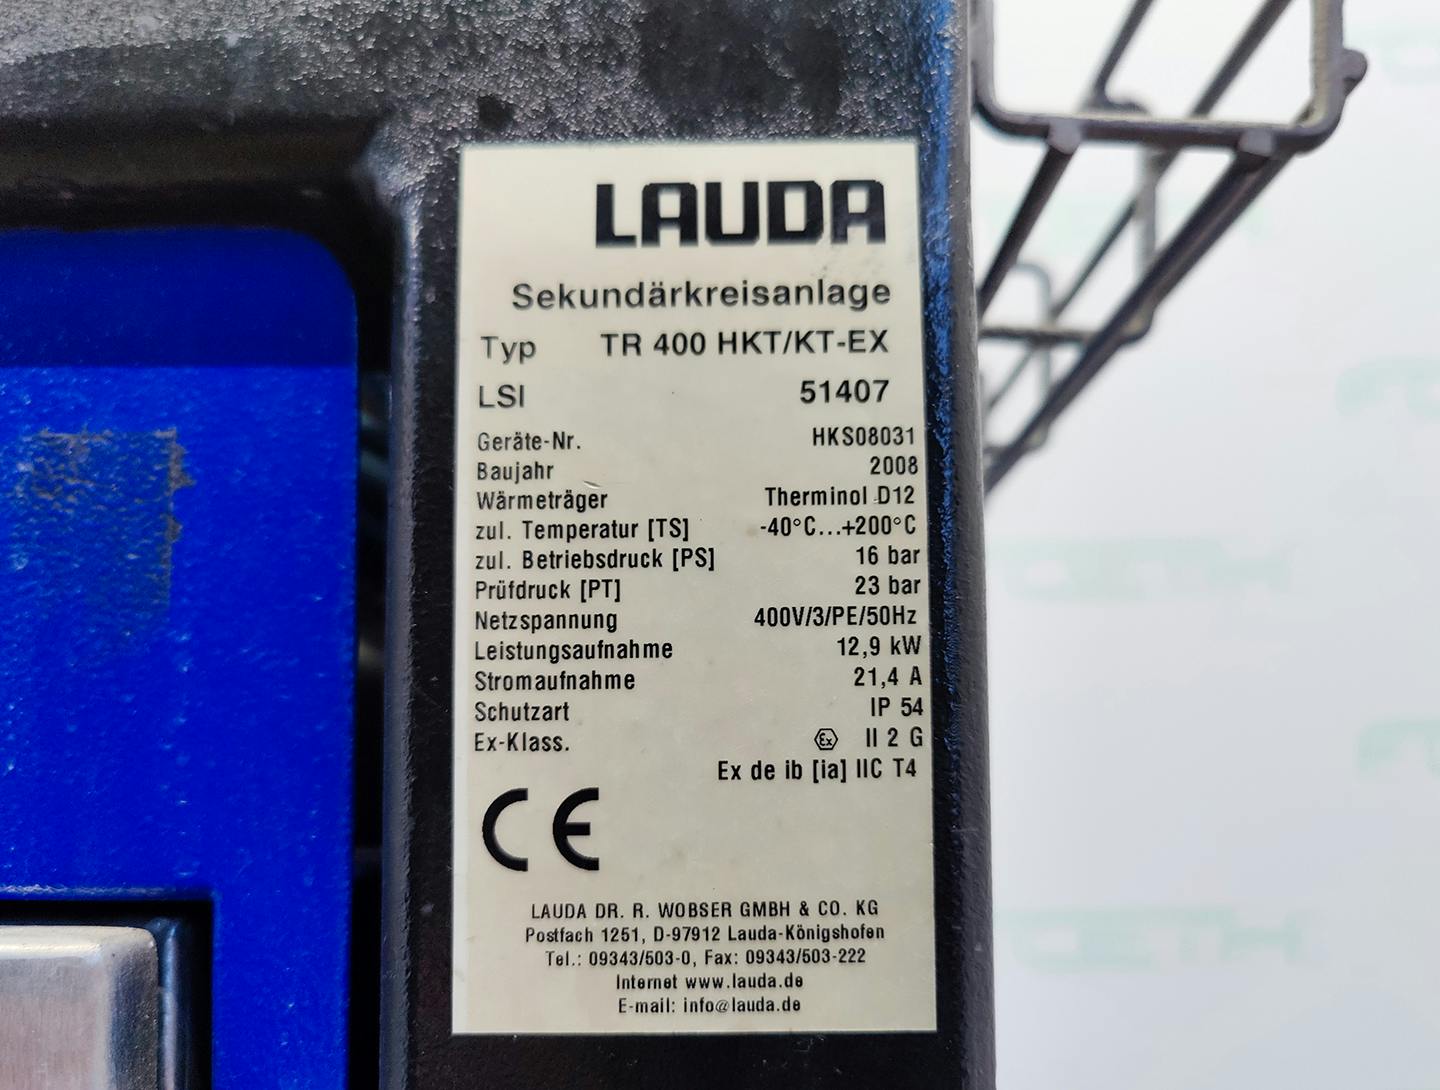 Lauda TR400 HKT/K-EX "secondary circuit system" - Atemperador - image 7